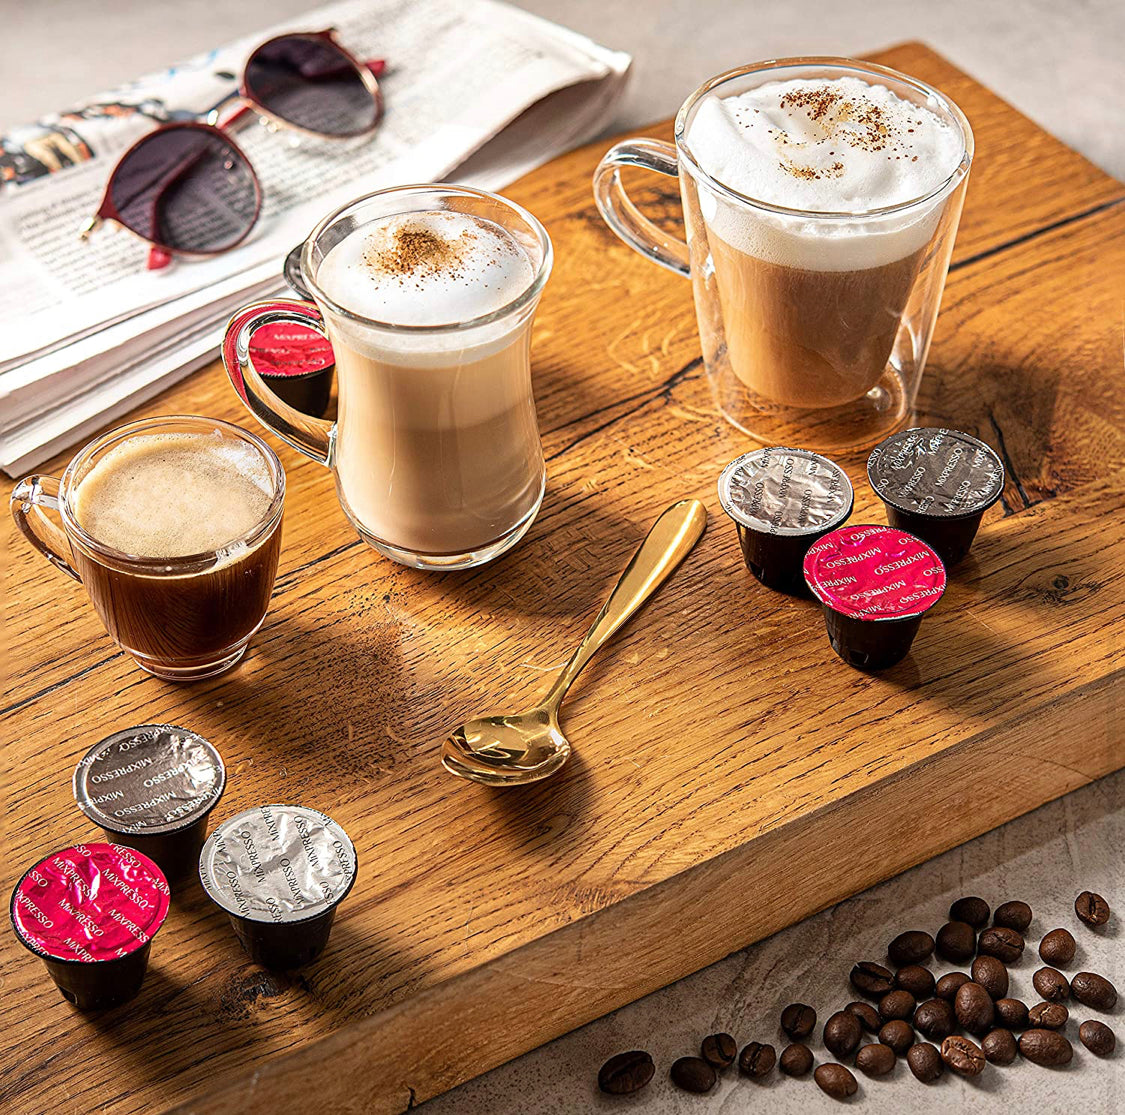  Mixpresso Máquina de café expreso para cápsulas compatibles con  Nespresso, cafetera de una sola porción programable para cápsulas de  espresso, bomba de alta presión italiana de 19 bares, cafetera : Hogar